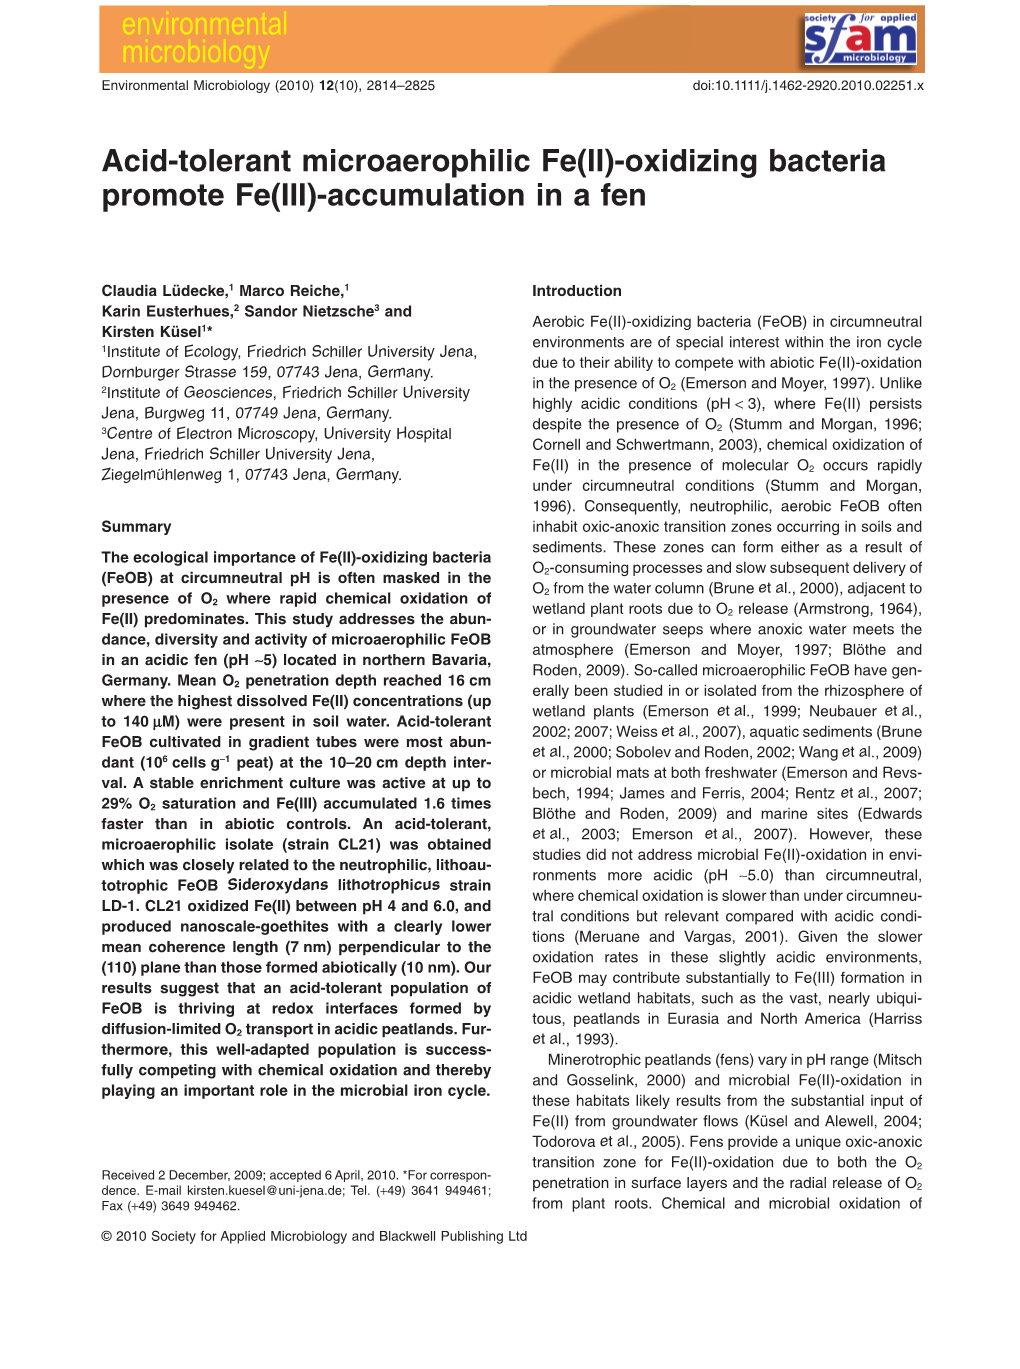 Acidtolerant Microaerophilic Fe(II)Oxidizing Bacteria Promote Fe